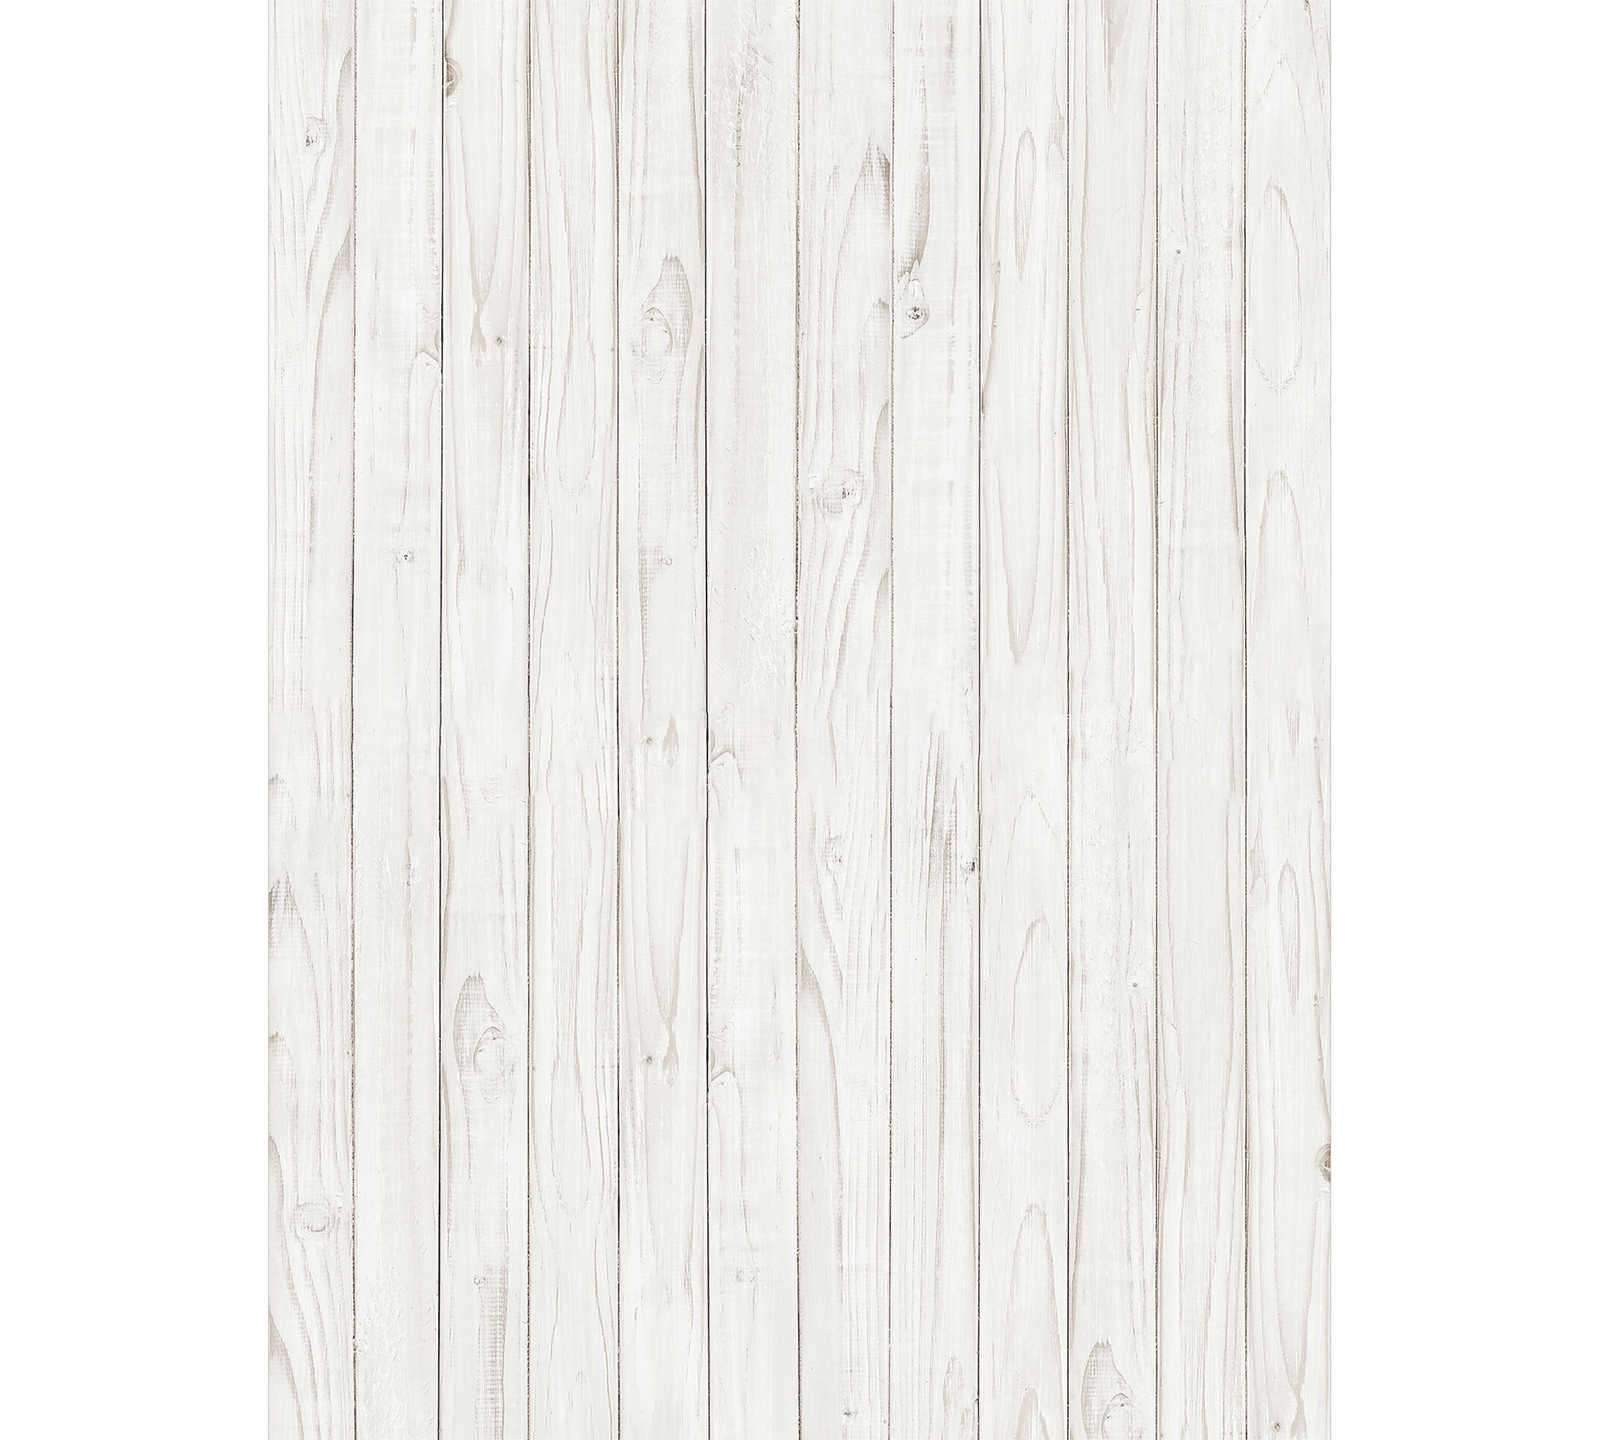         Fototapete 3D Holzoptik Wand – Weiß, Grau
    